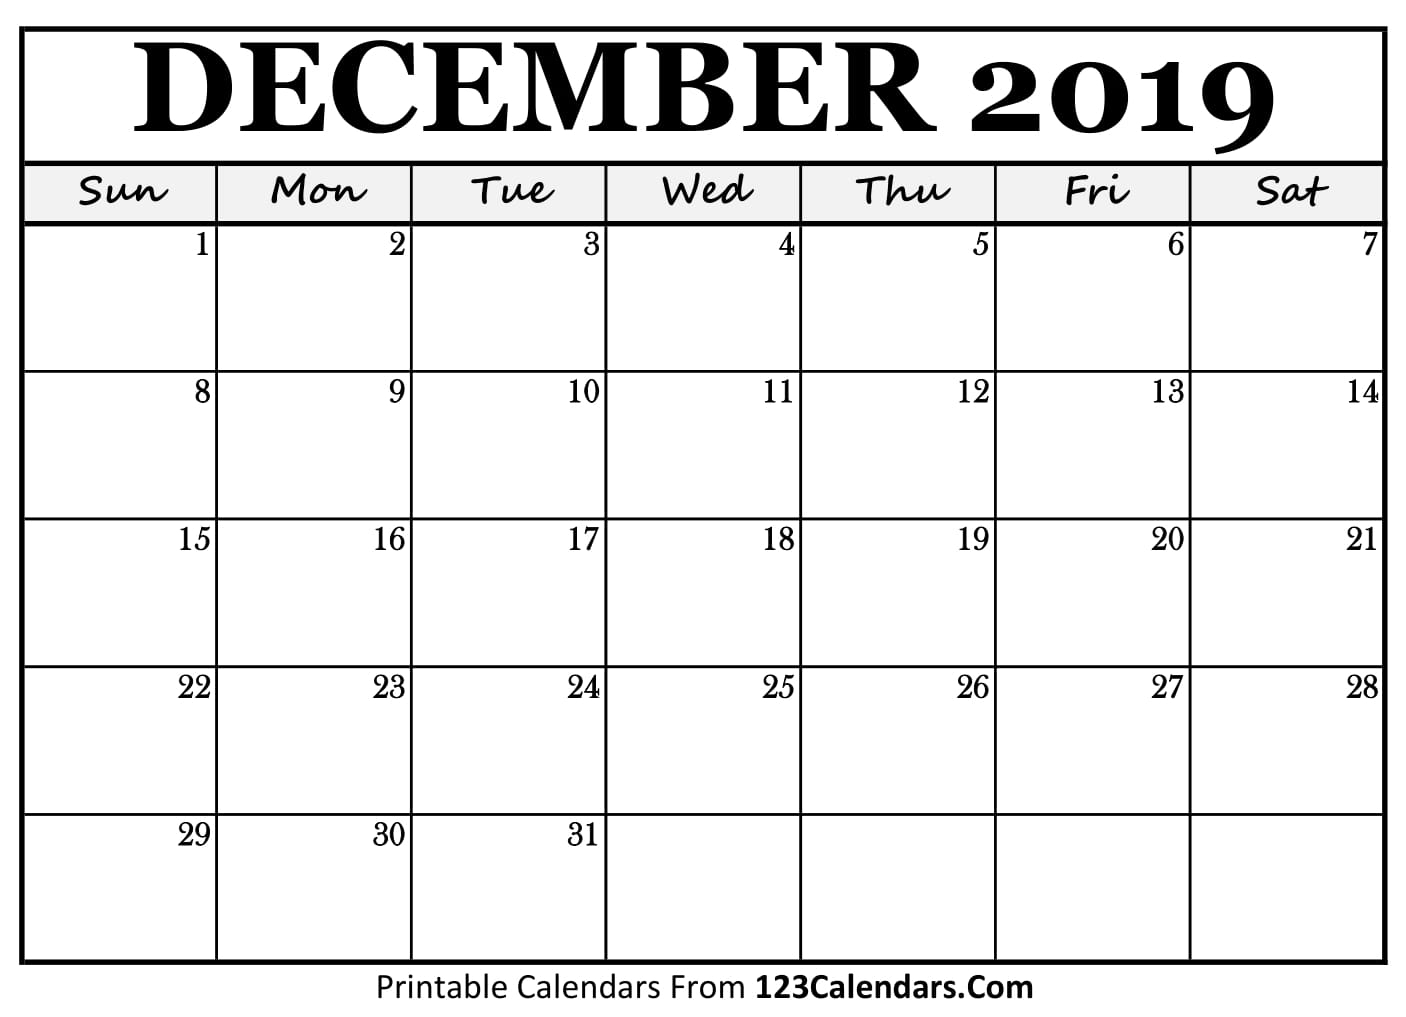 December 2019 Printable Calendar | 123Calendars